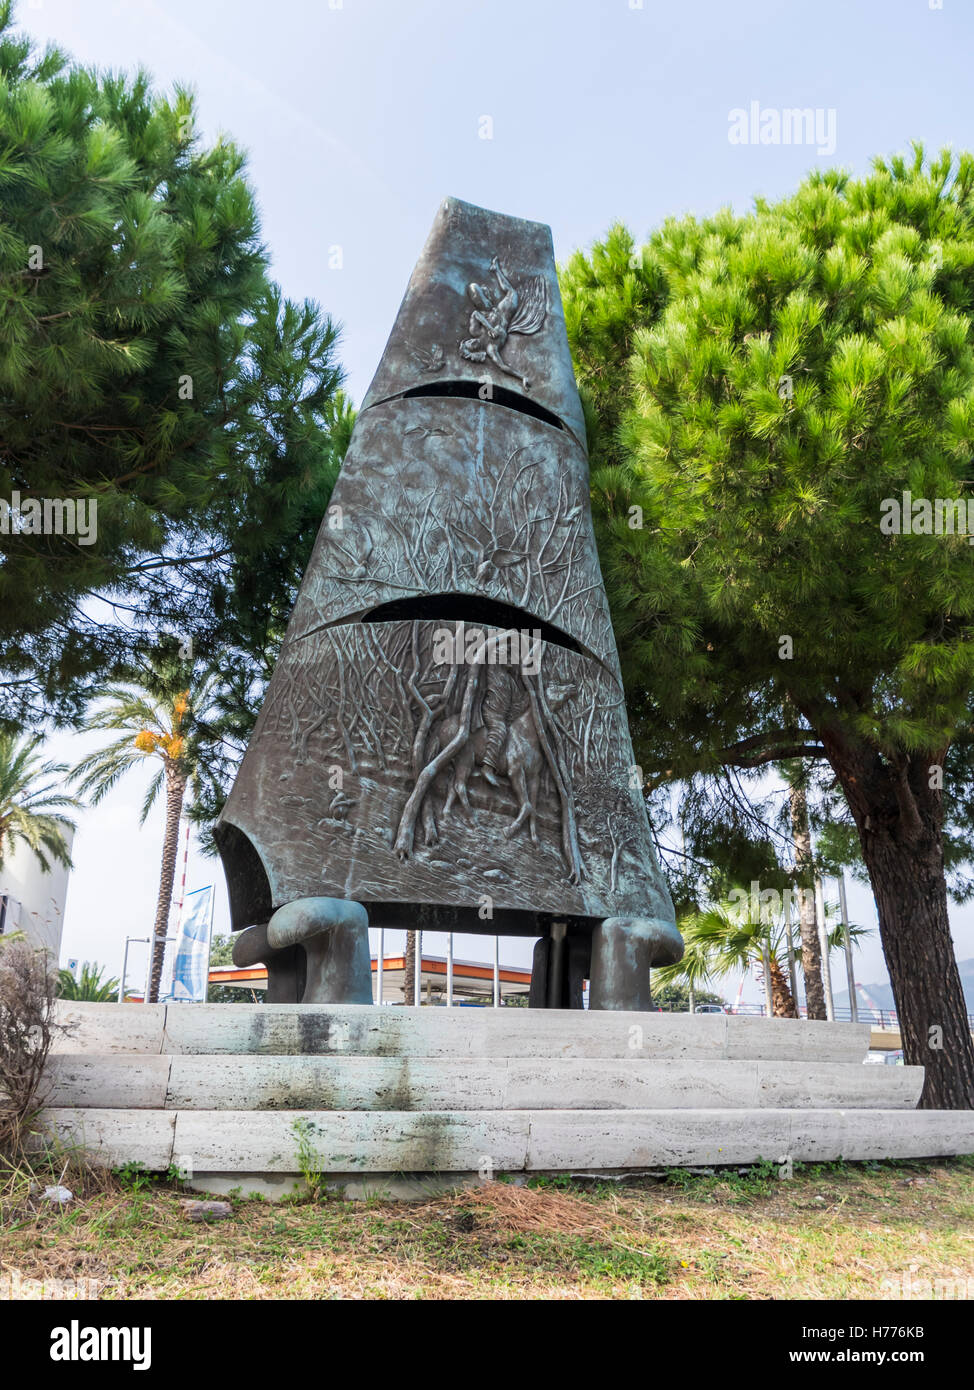 'Vela di Colombo' (Columbus' sail), a bronze sculpture featuring Icarus' flight, by Gino Giannetti. Cristoforo Colombo airport, Genova, Italy. Stock Photo